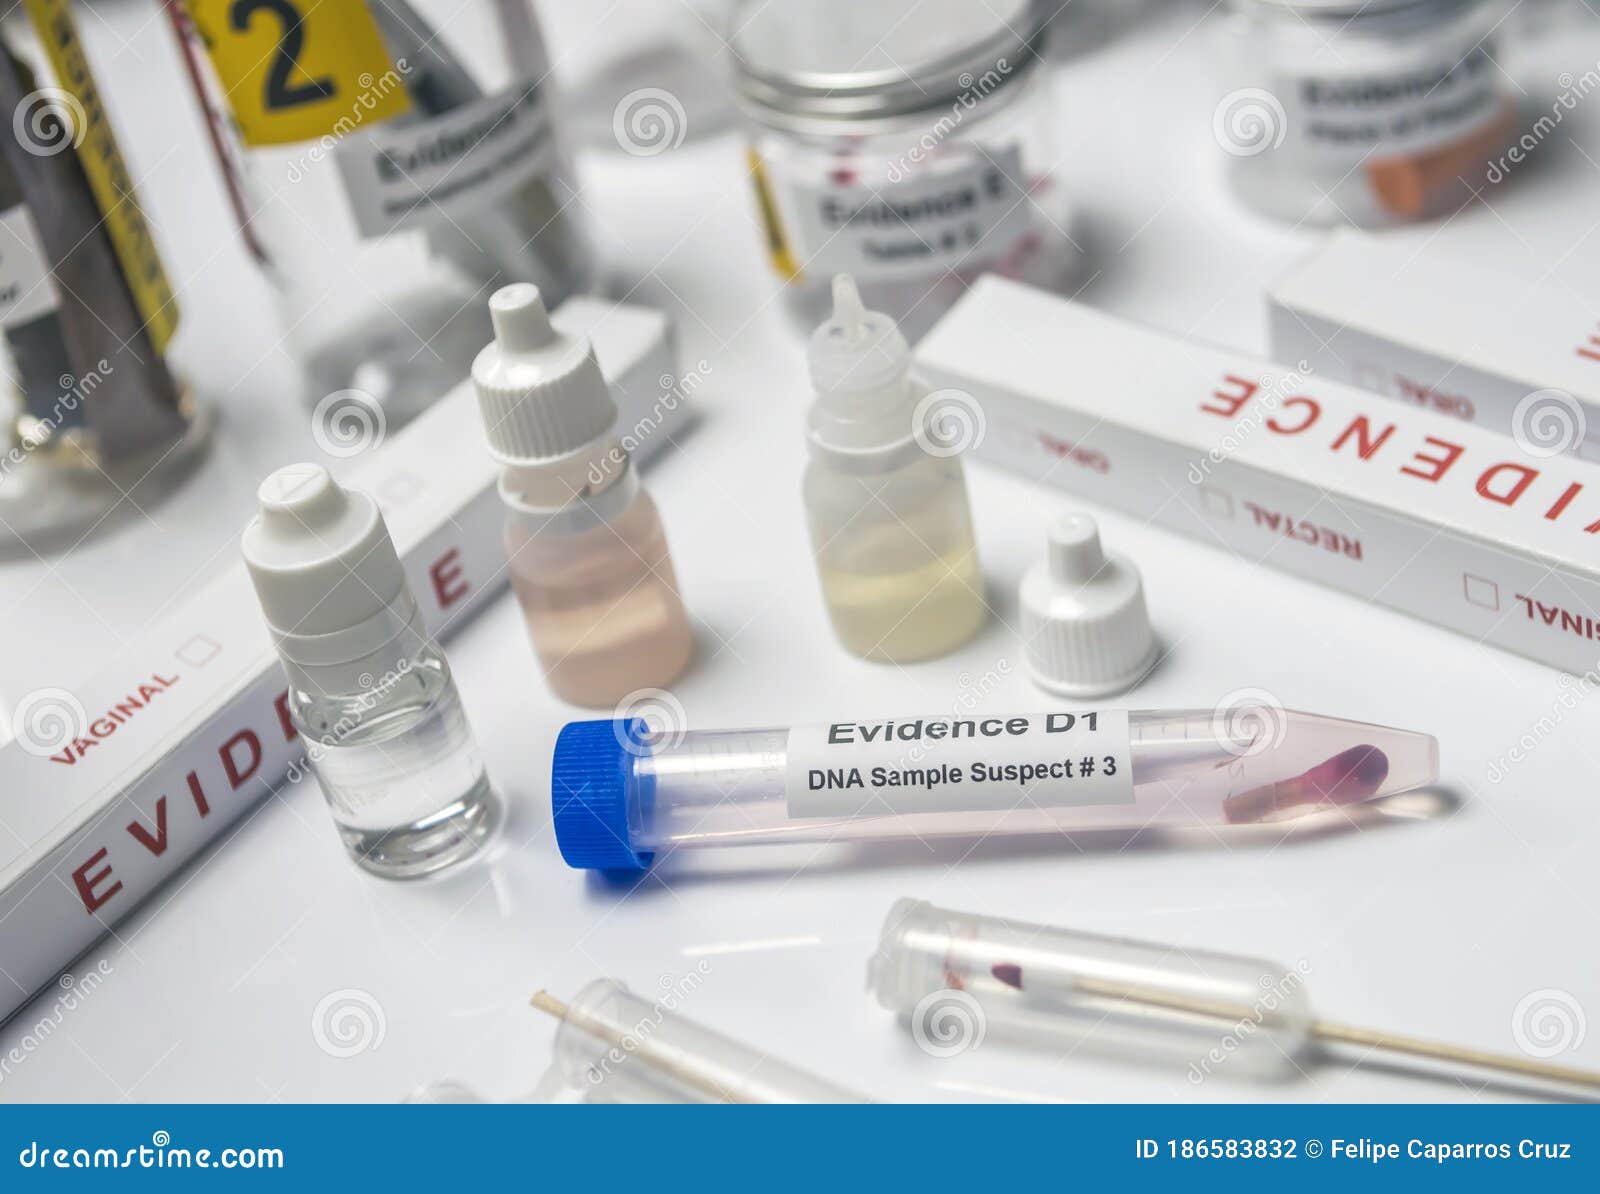 detail of dna sampling box in laboratorio forensic equipment